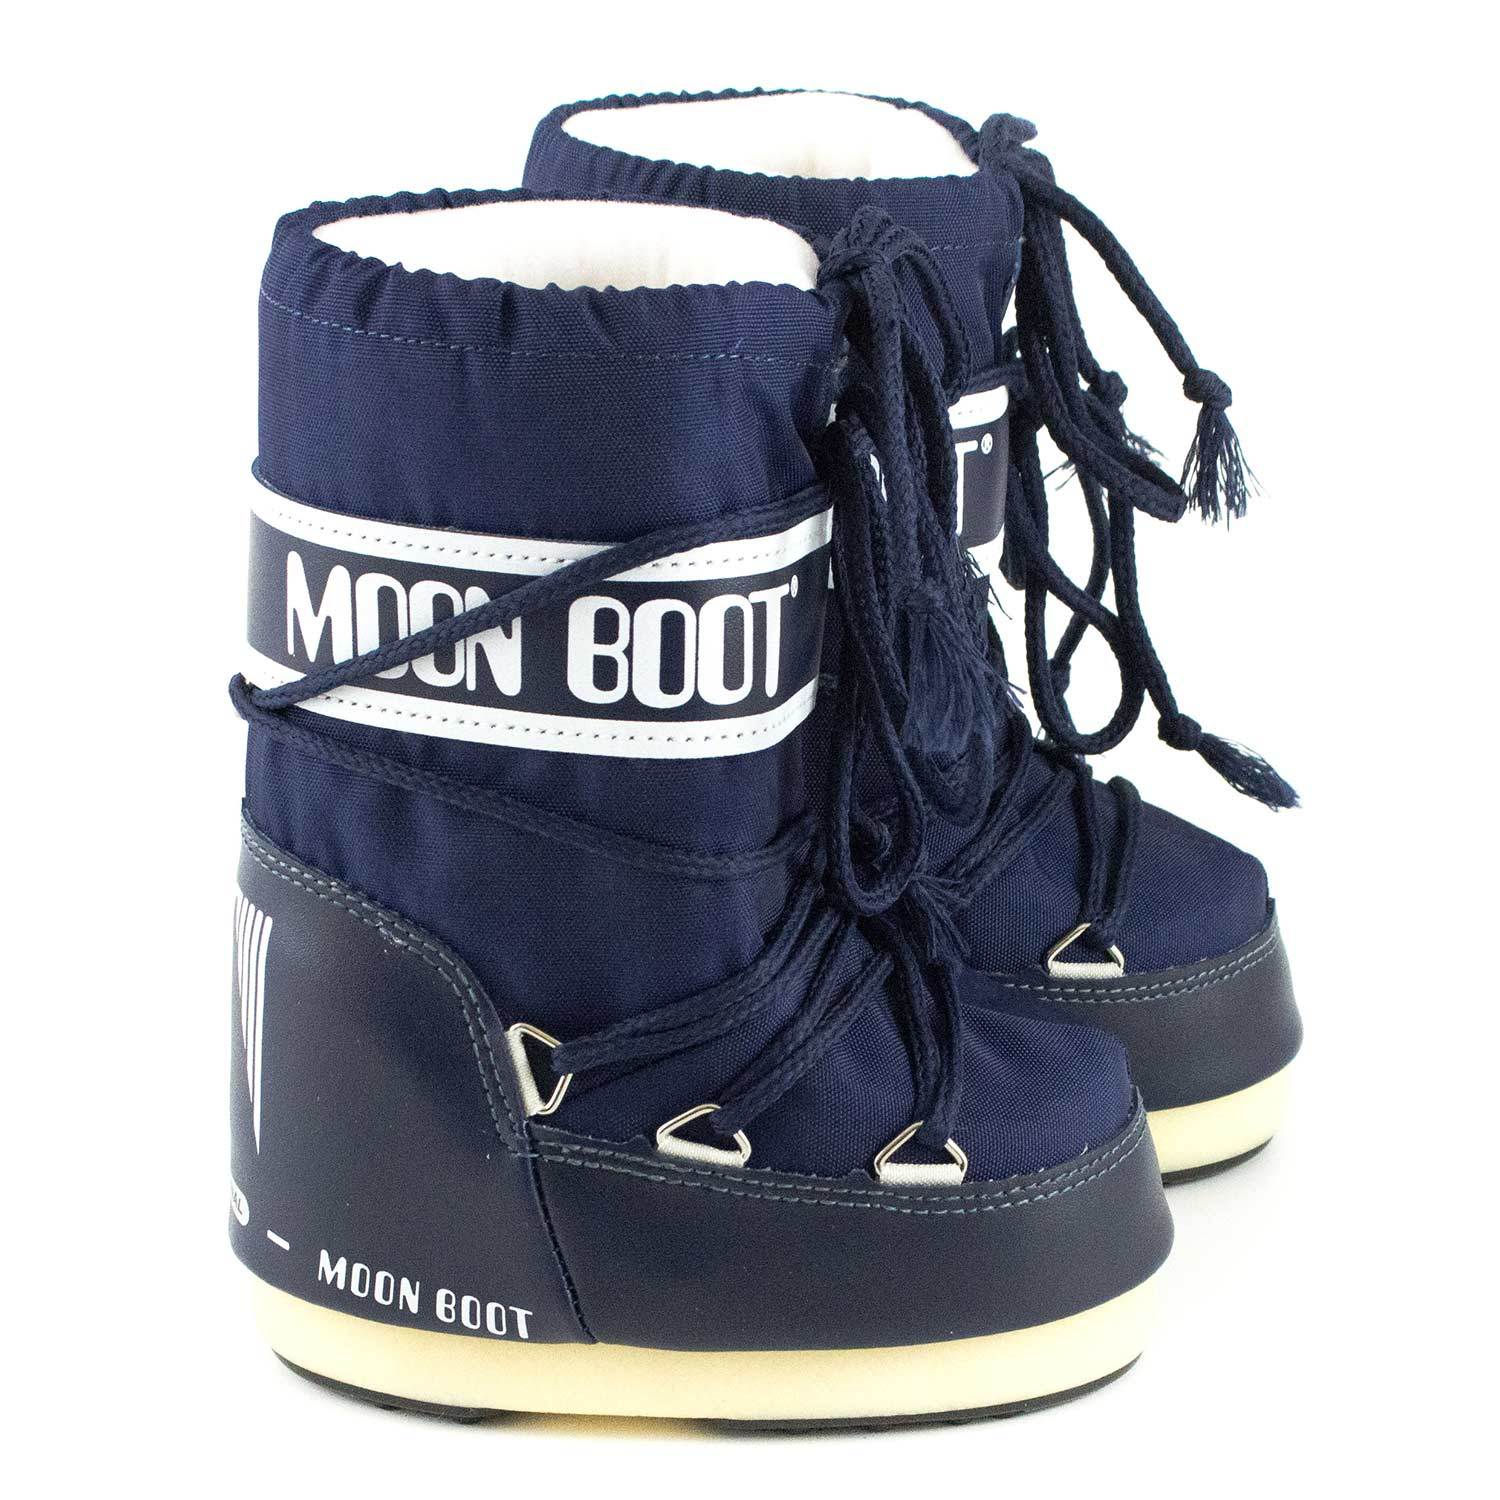 Moon boot-Bébé fille-MOON BOOT-Maralex Paris (1975382638655)